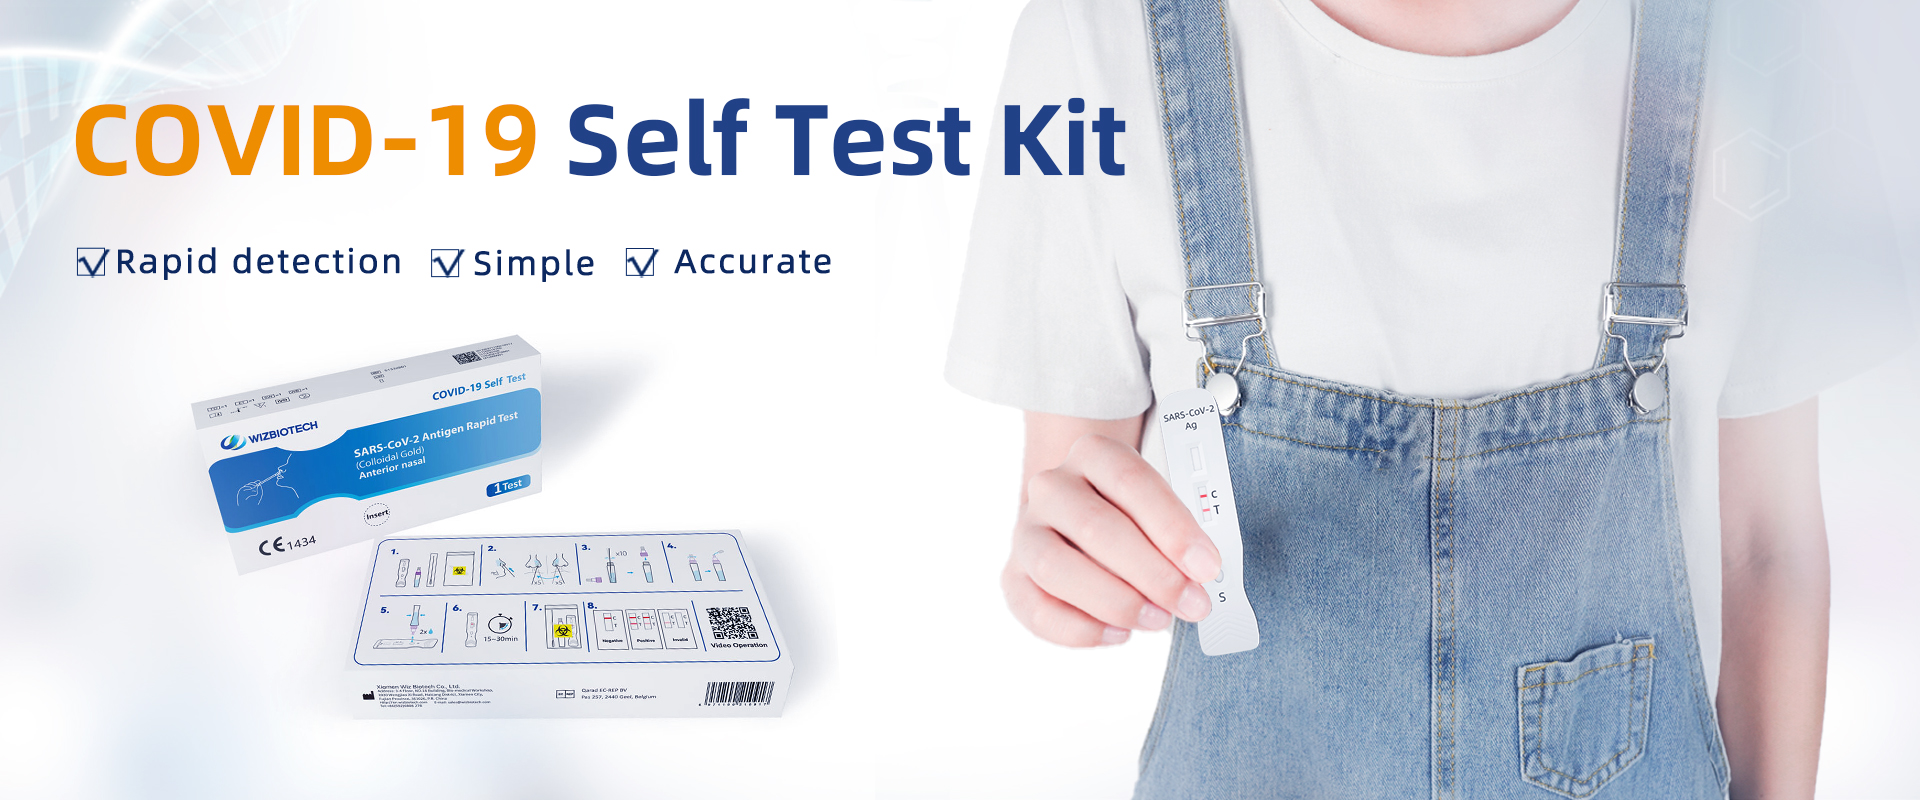 COVID-19 Self Test Kit